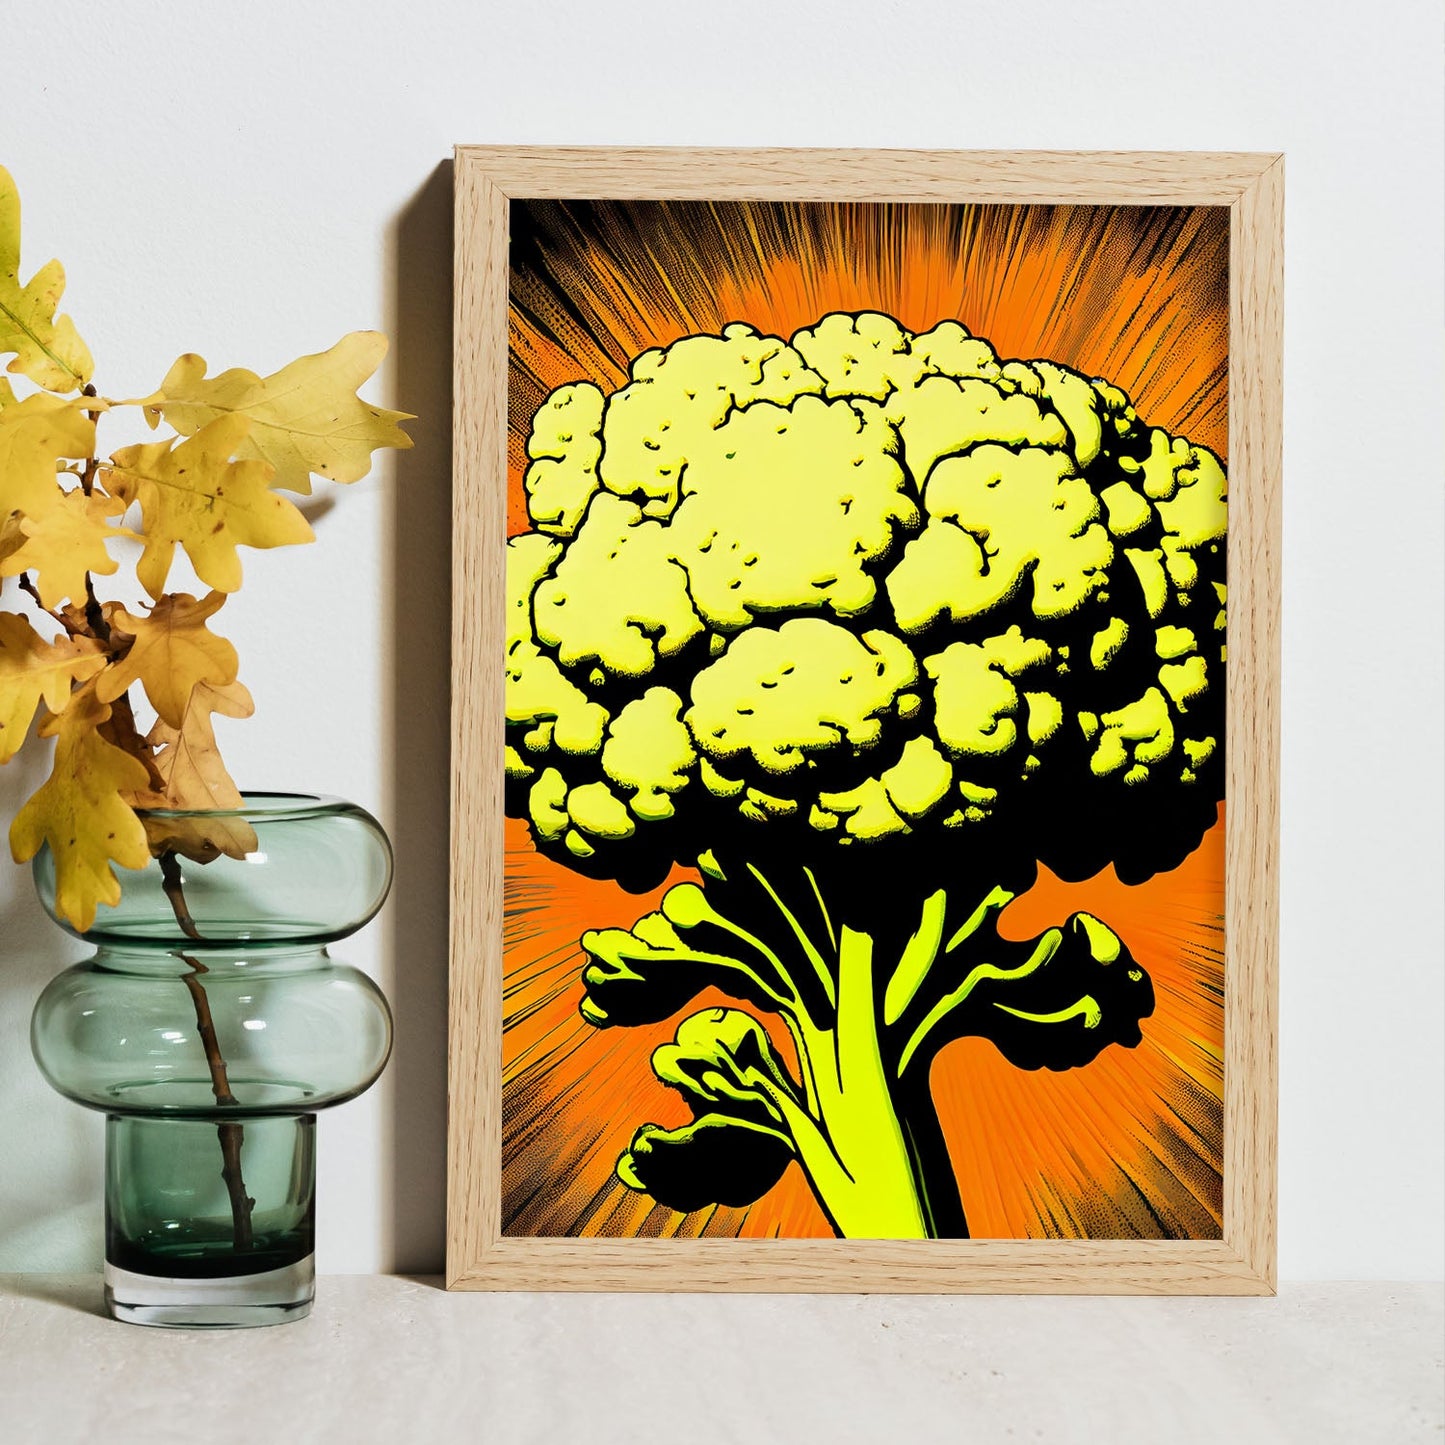 Nacnic Cauliflower Pop Art. Aesthetic Wall Art Prints for Bedroom or Living Room Design.